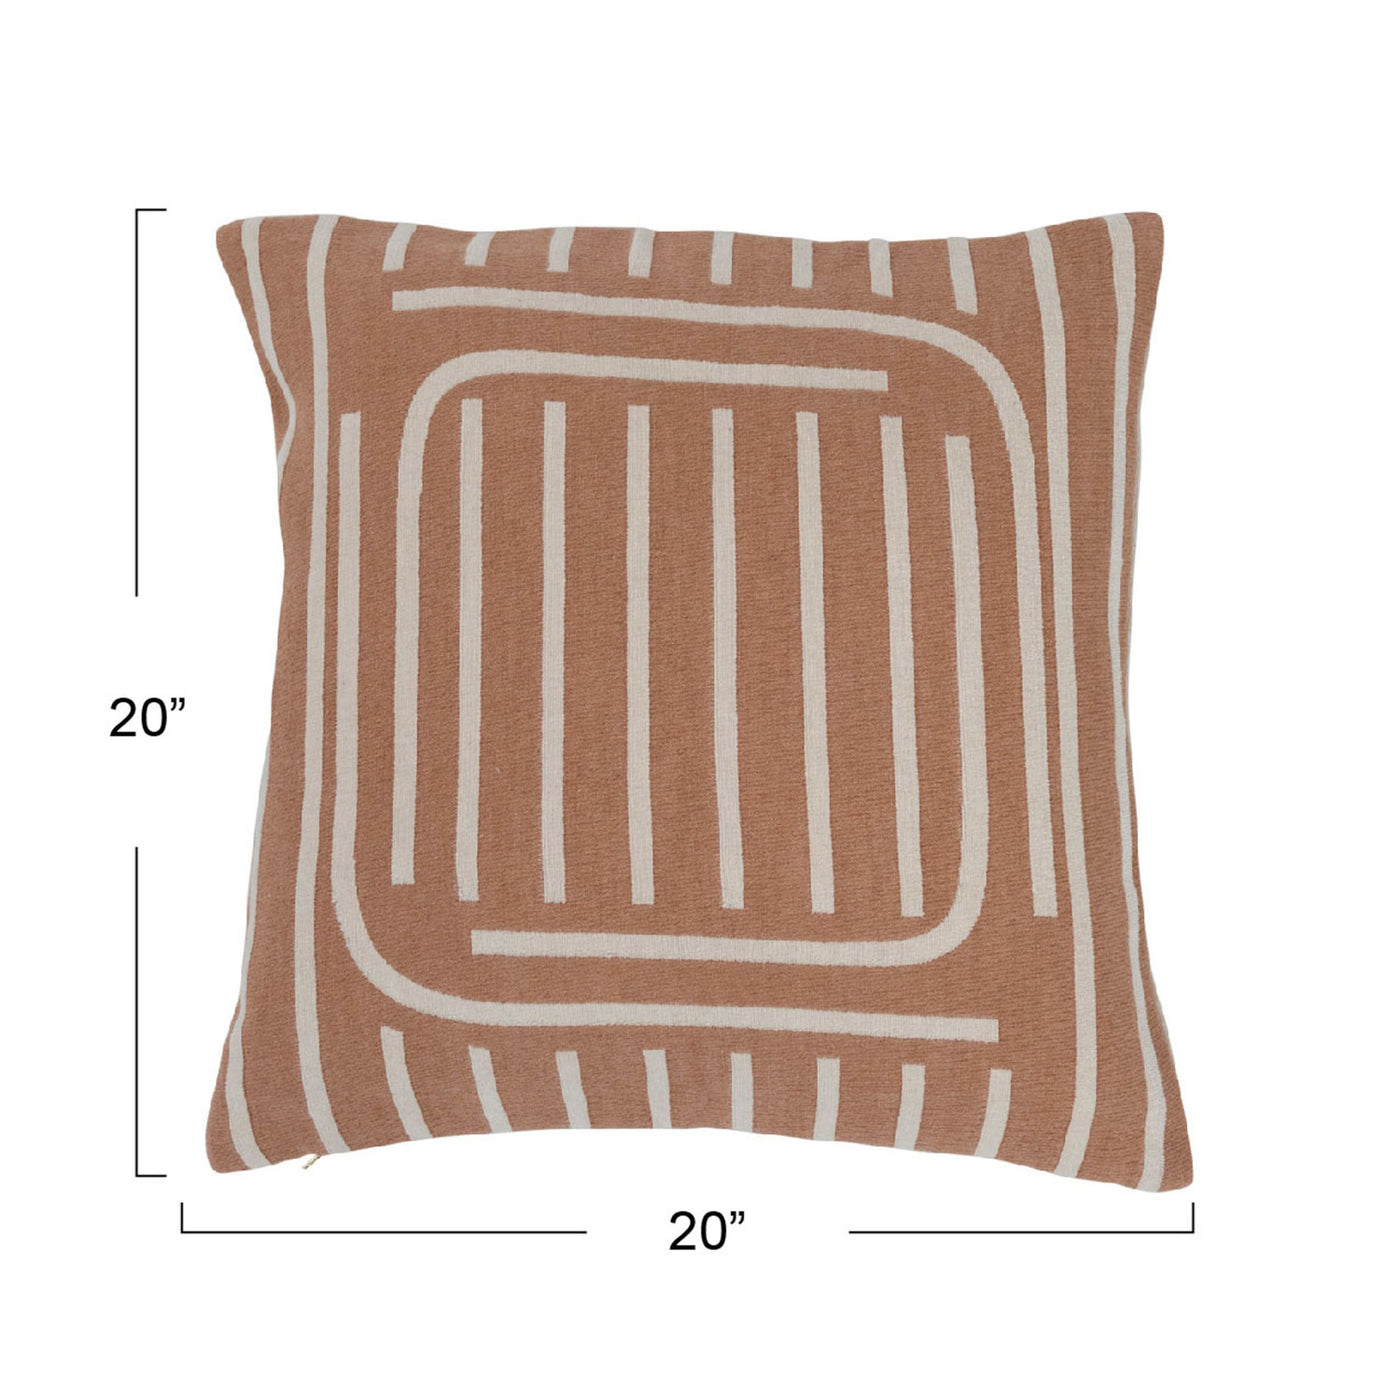 20" Woven Cotton Reversible Pillow w/ Lines, Salmon & White